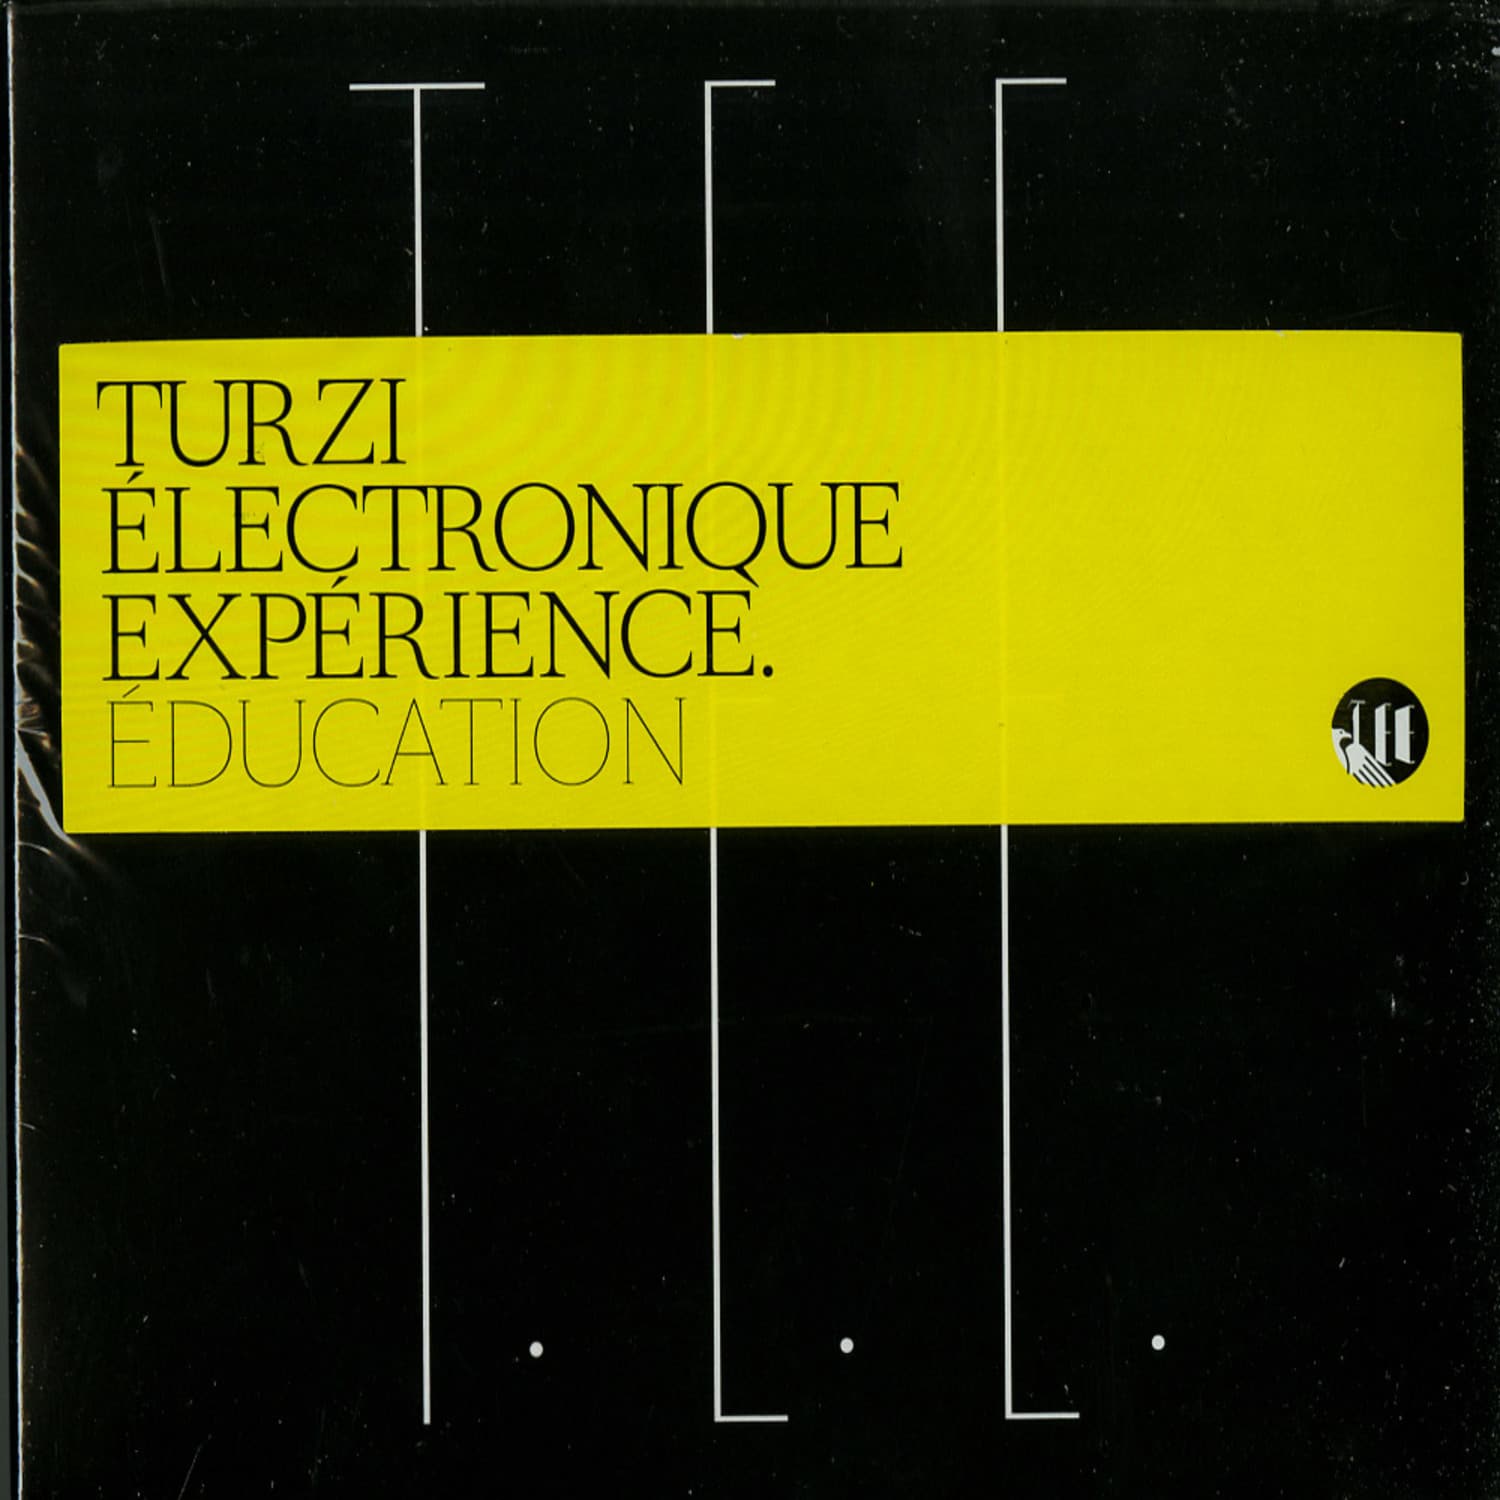 Turzi Electronique Experience - EDUCATION